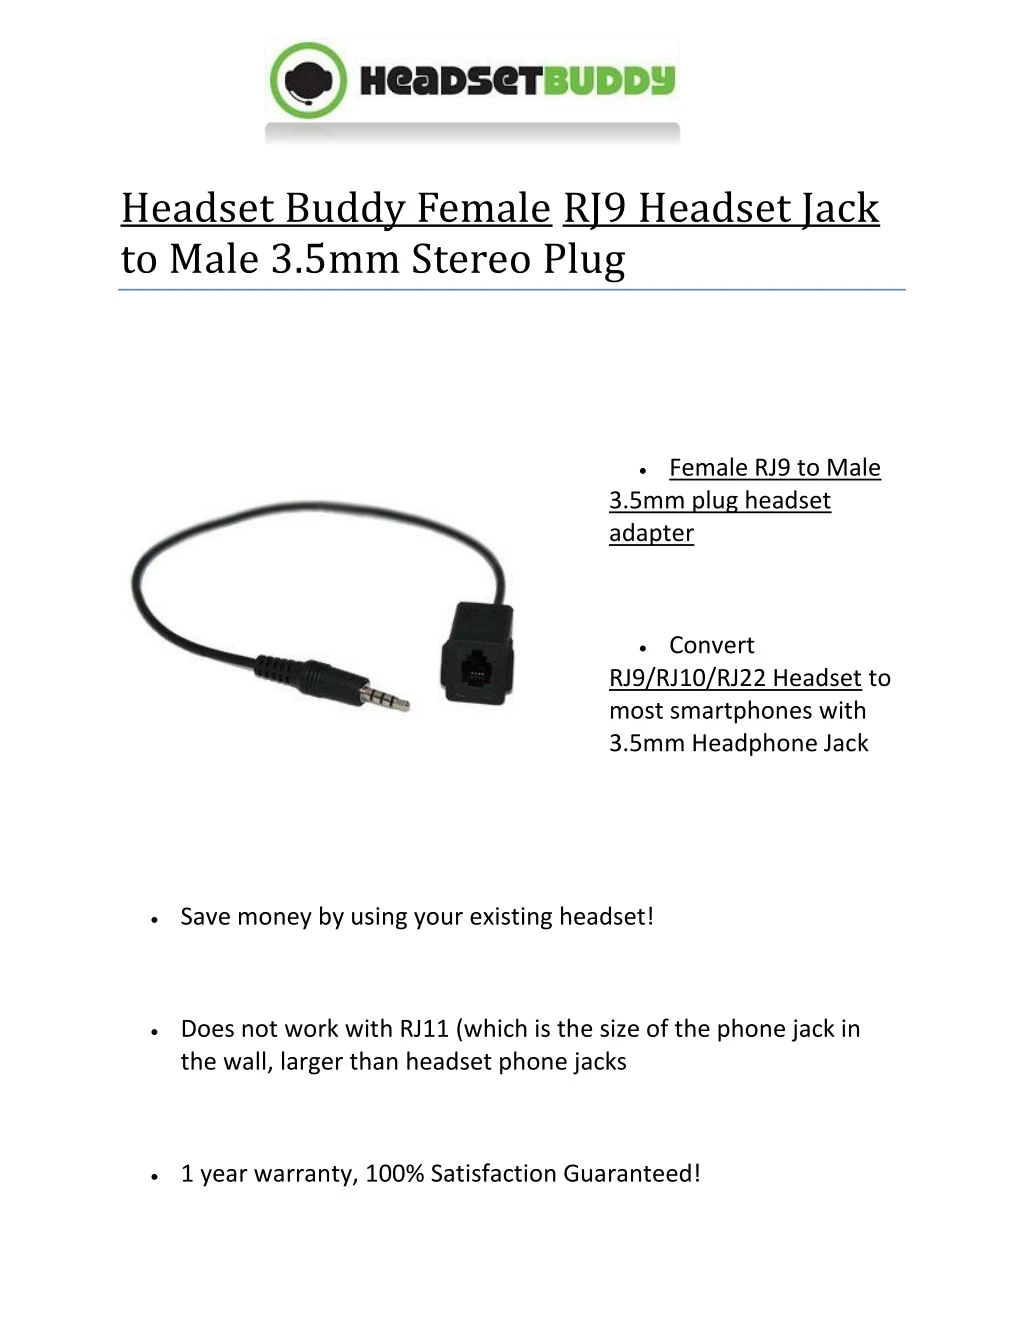 headset buddy female rj9 headset jack to male